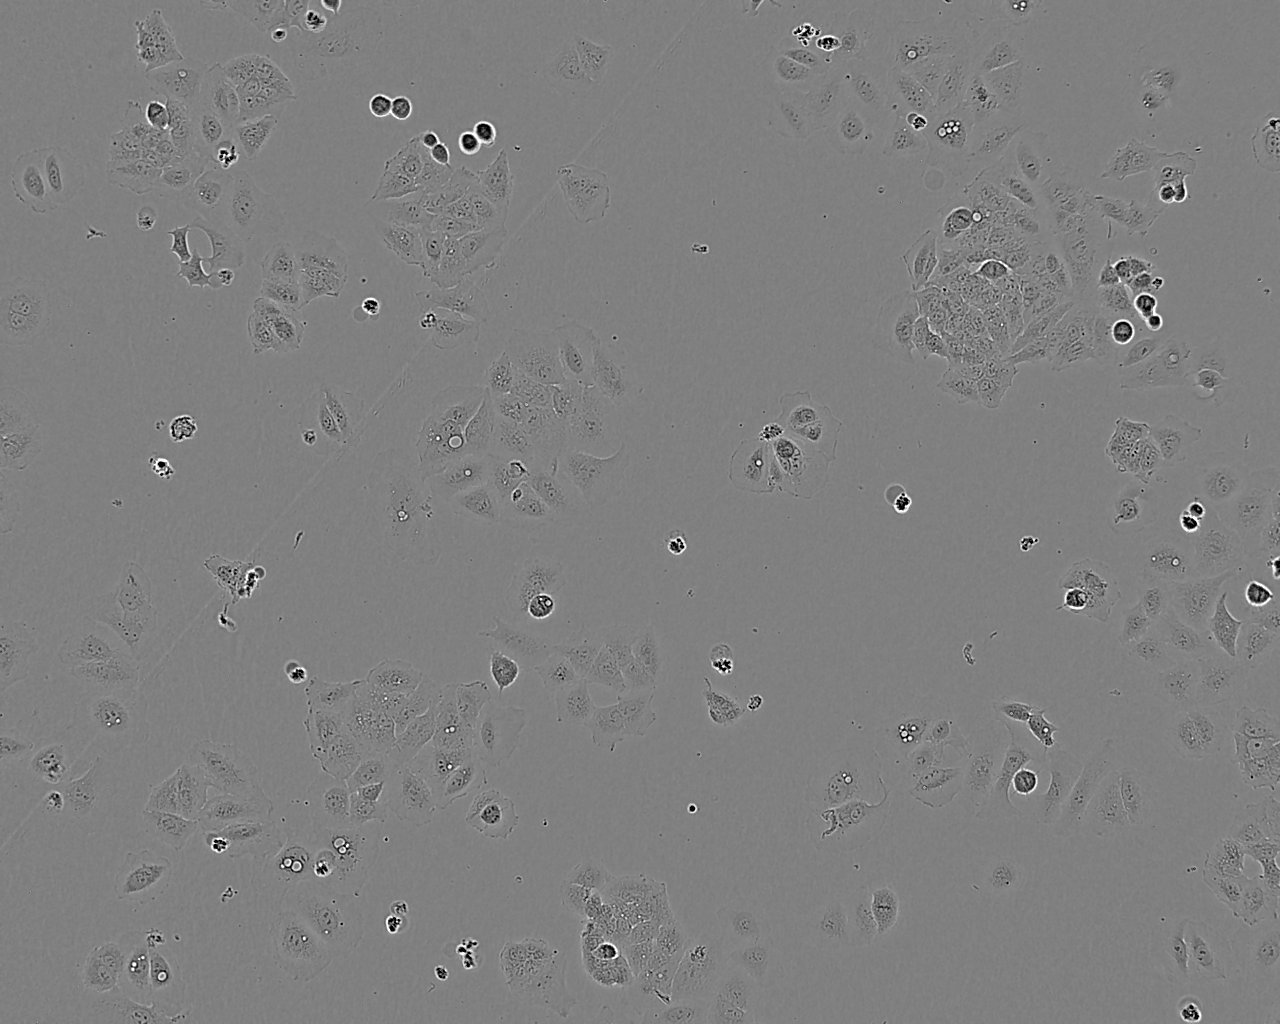 SNU-368 epithelioid cells人肝癌细胞系,SNU-368 epithelioid cells